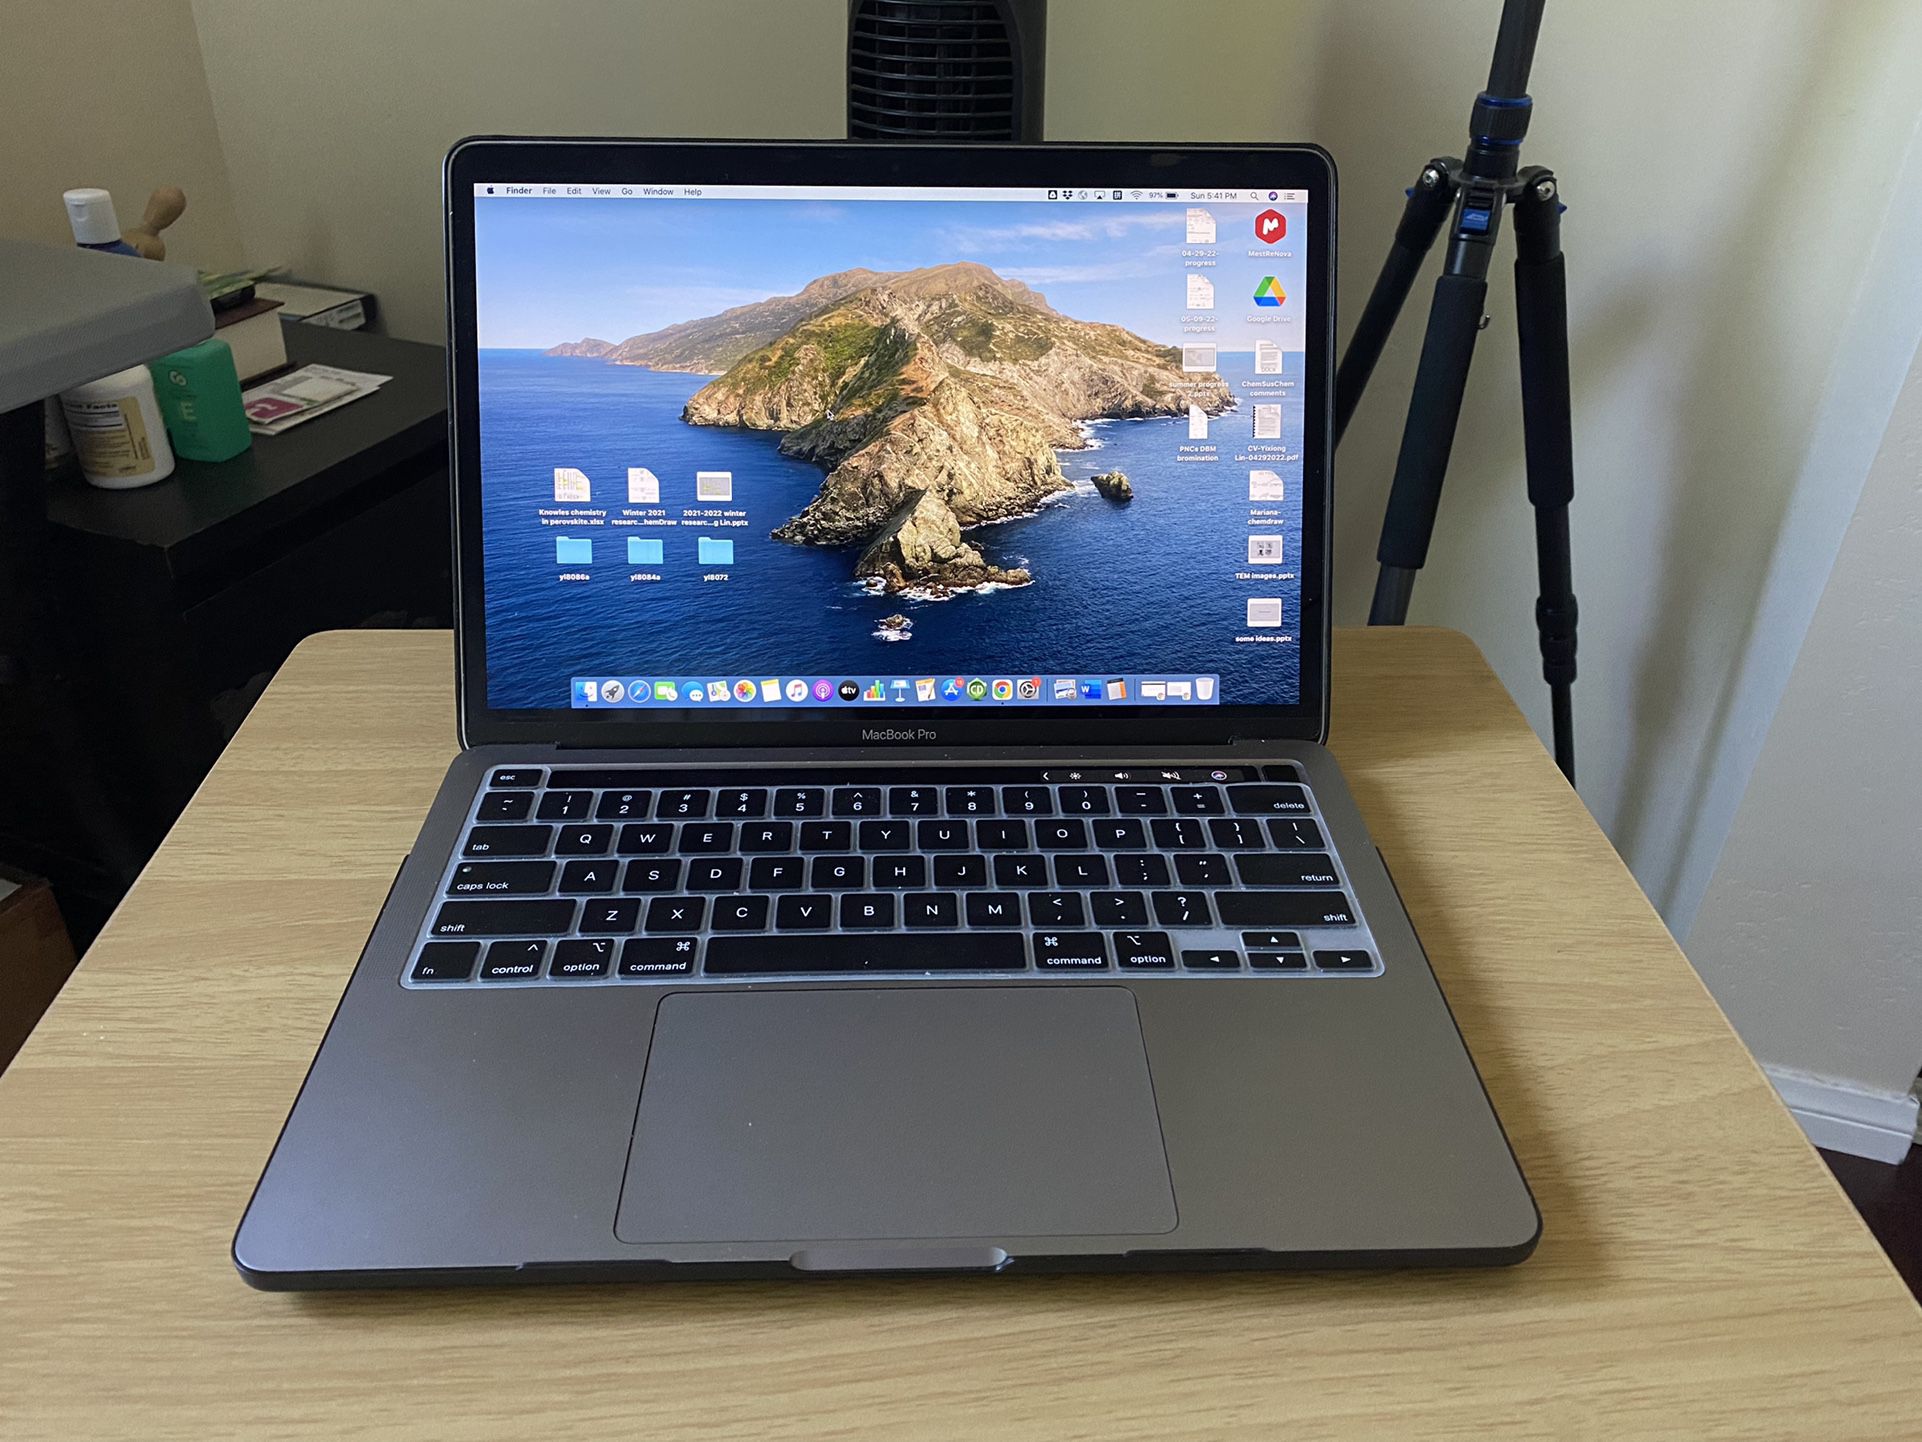 Apple MacBook Pro 2020 (i5-1038NG7, 16GB RAM, 512GB SSD)